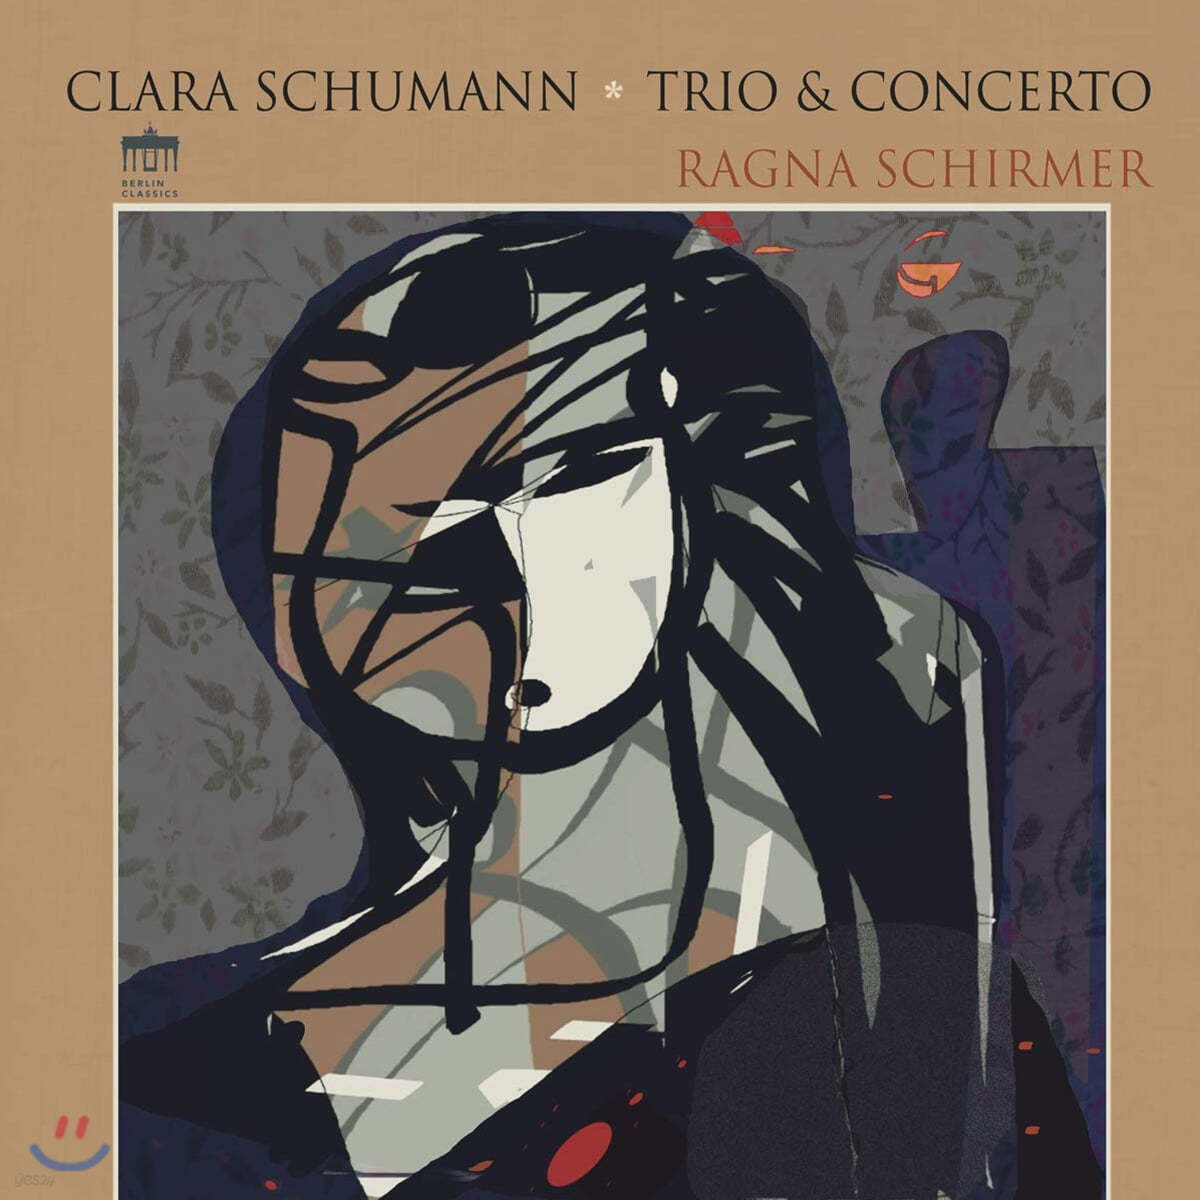 Ragna Schirmer 클라라 슈만: 피아노 협주곡, 트리오 (Clara Schumann: Piano Concerto Op.7, Trio Op.17) [LP]